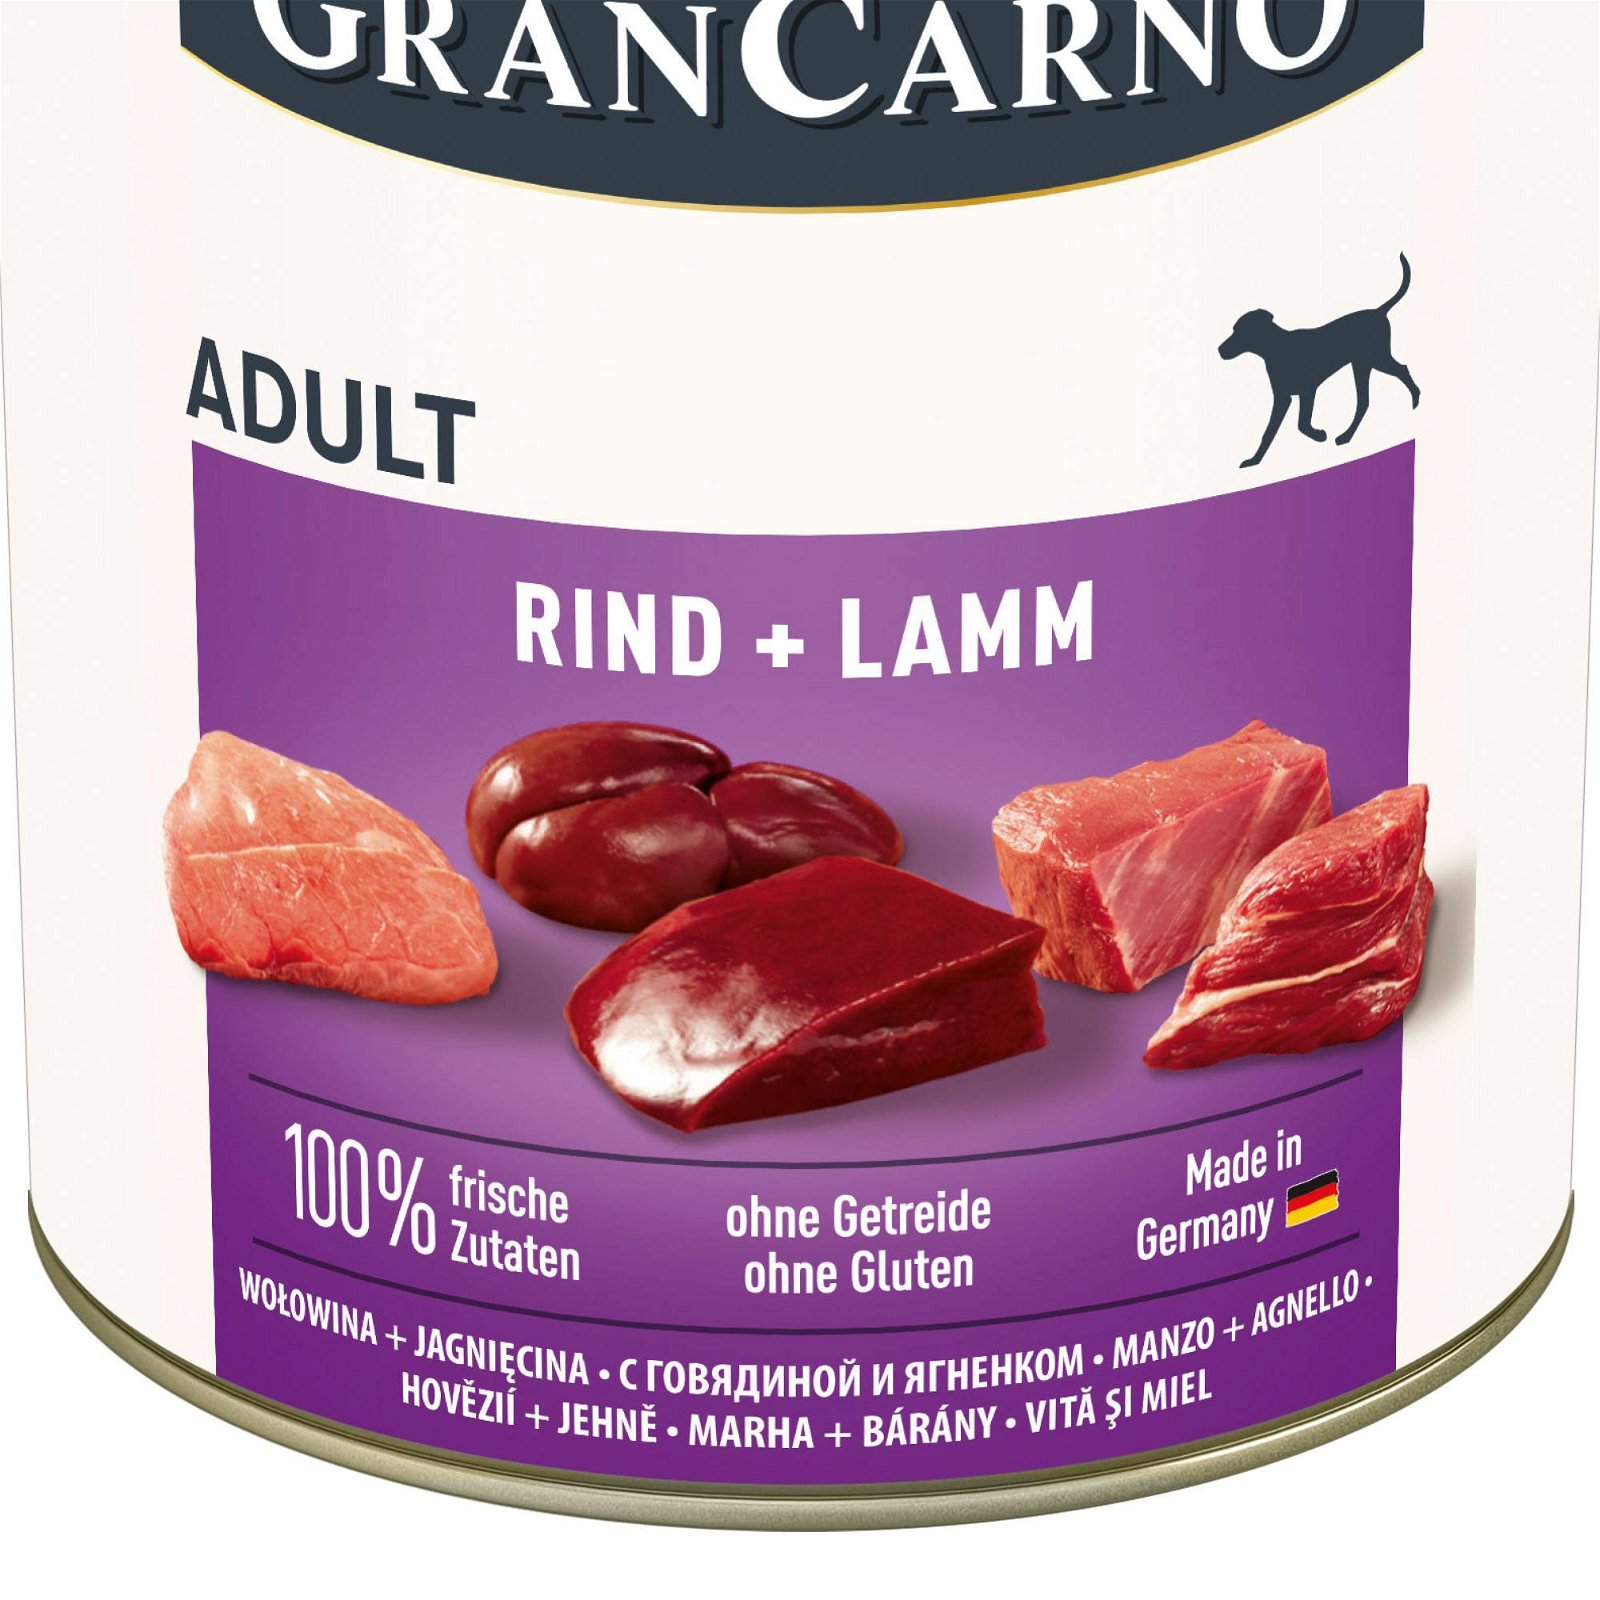 Hundefutter 'Animonda Cran Carno ® Adult', Rind & Lamm